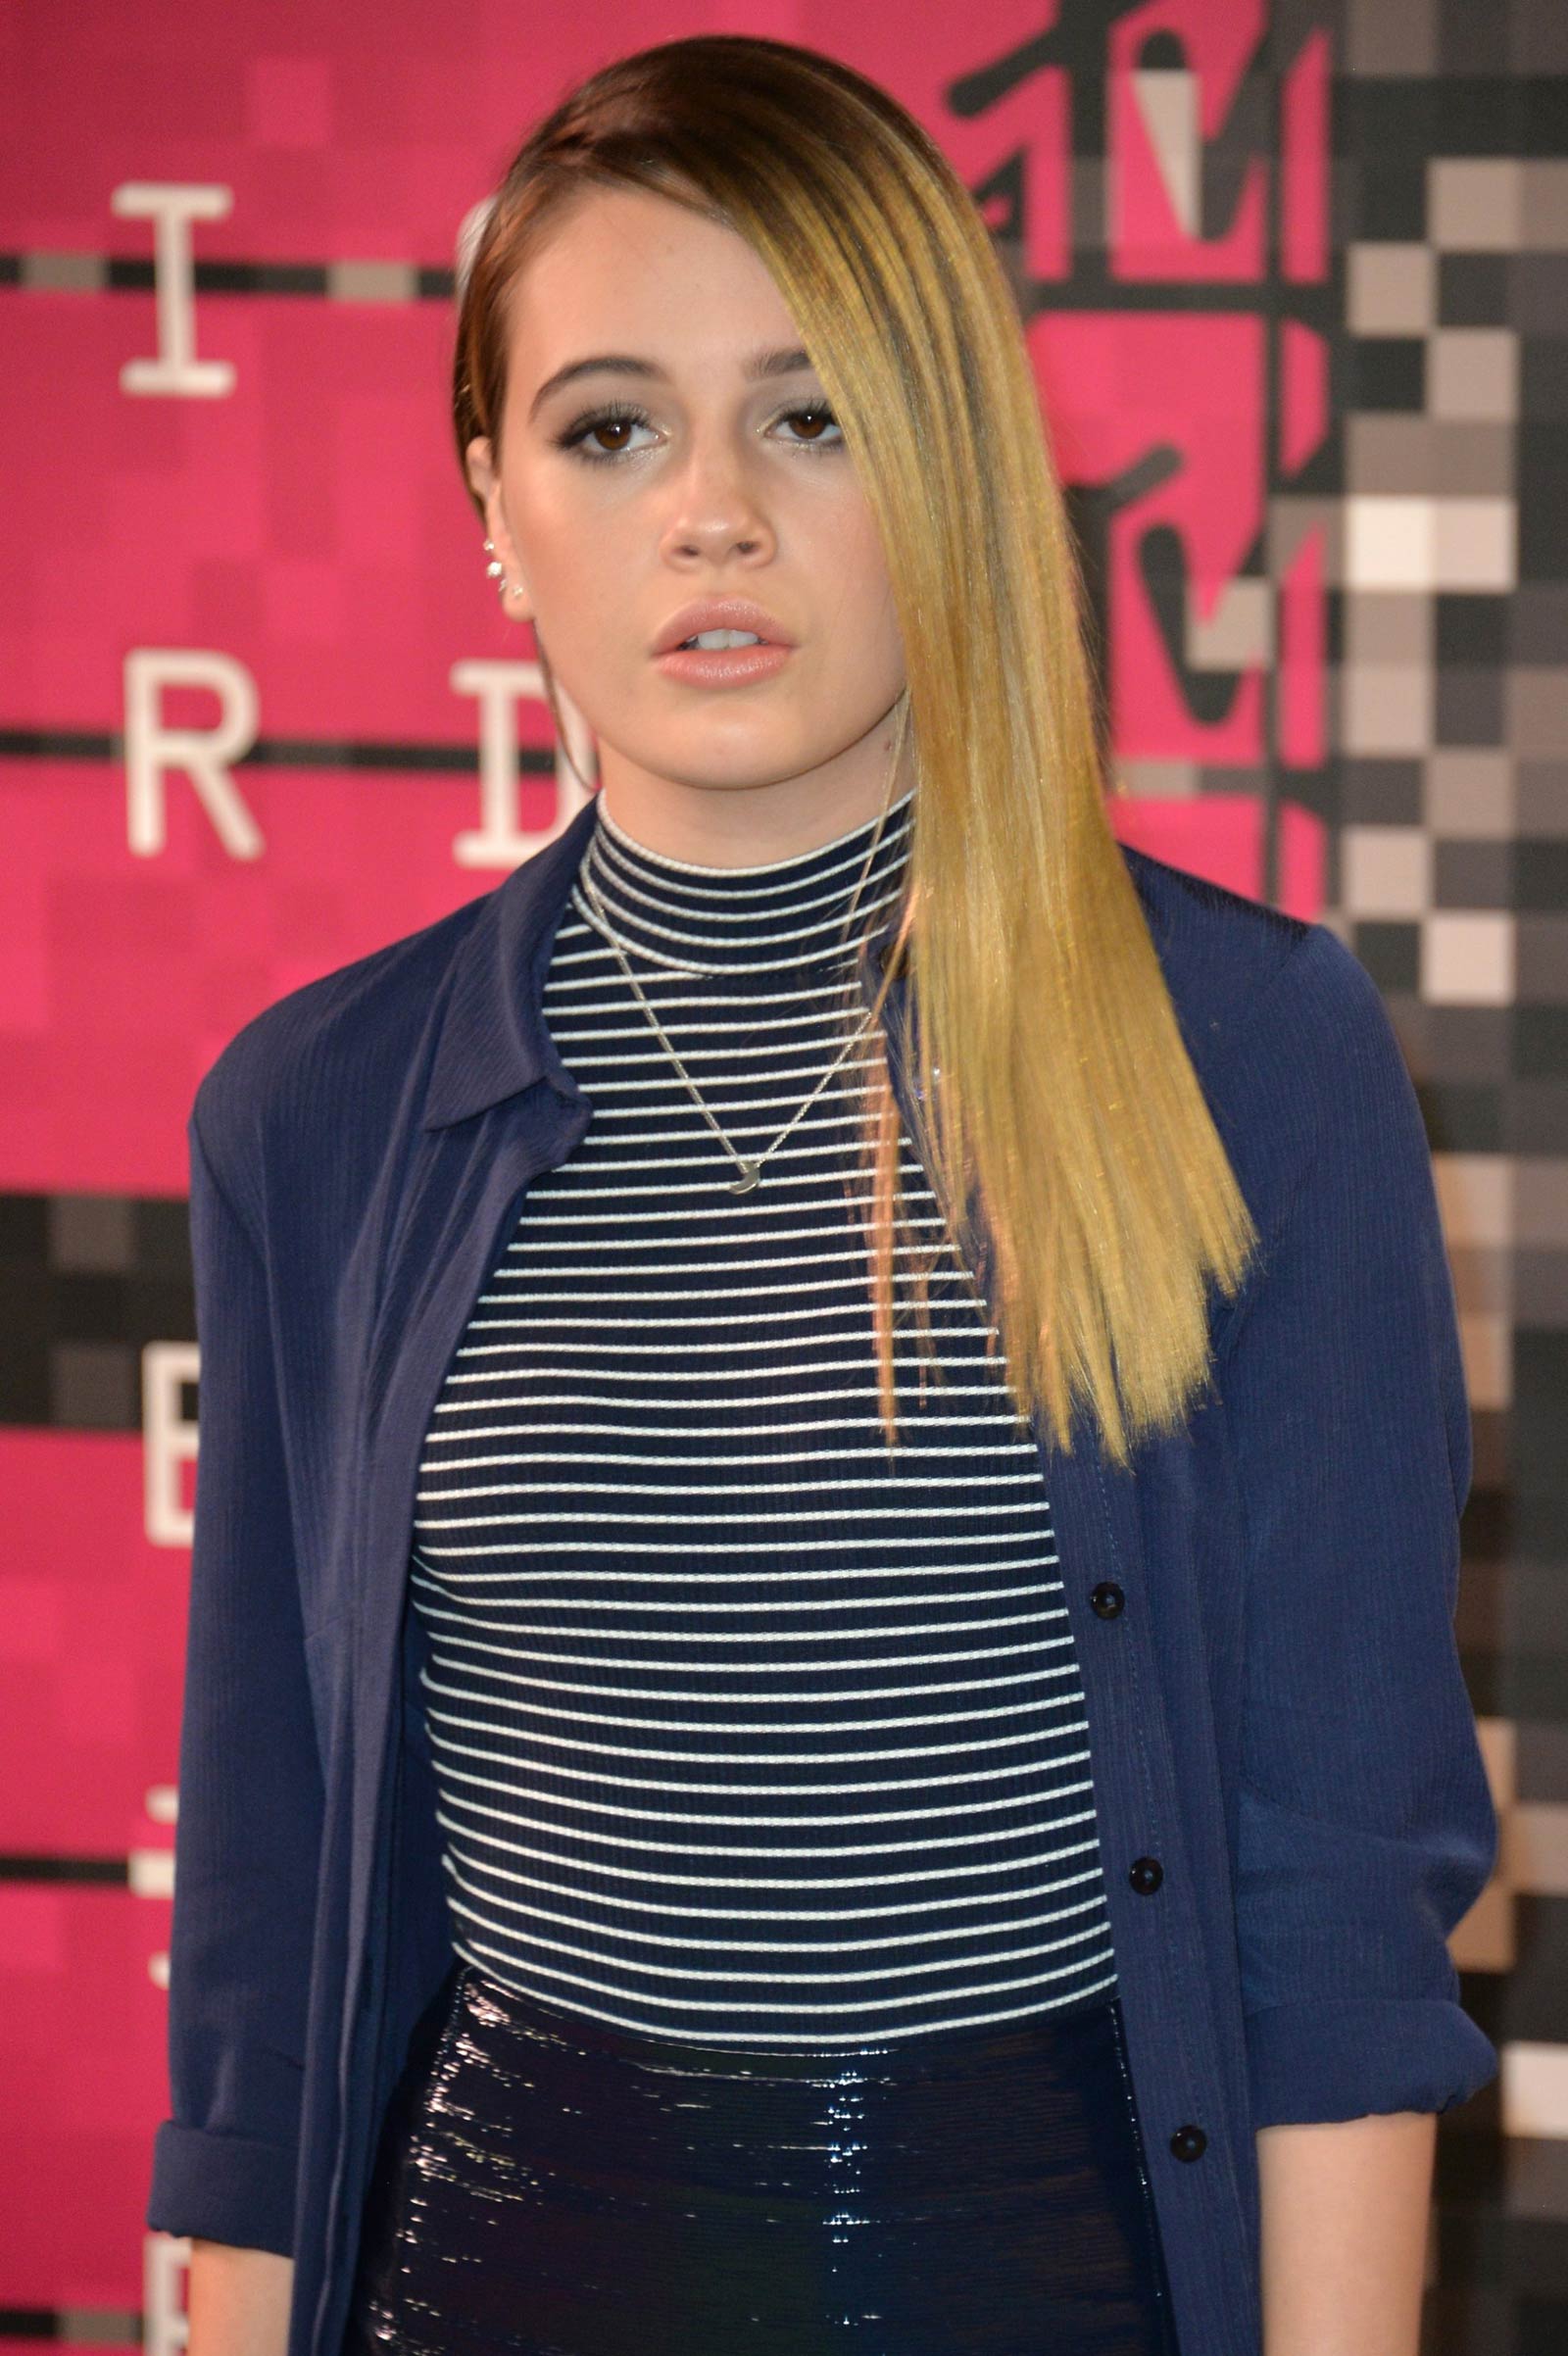 Beatrice Miller attends MTV Video Music Awards